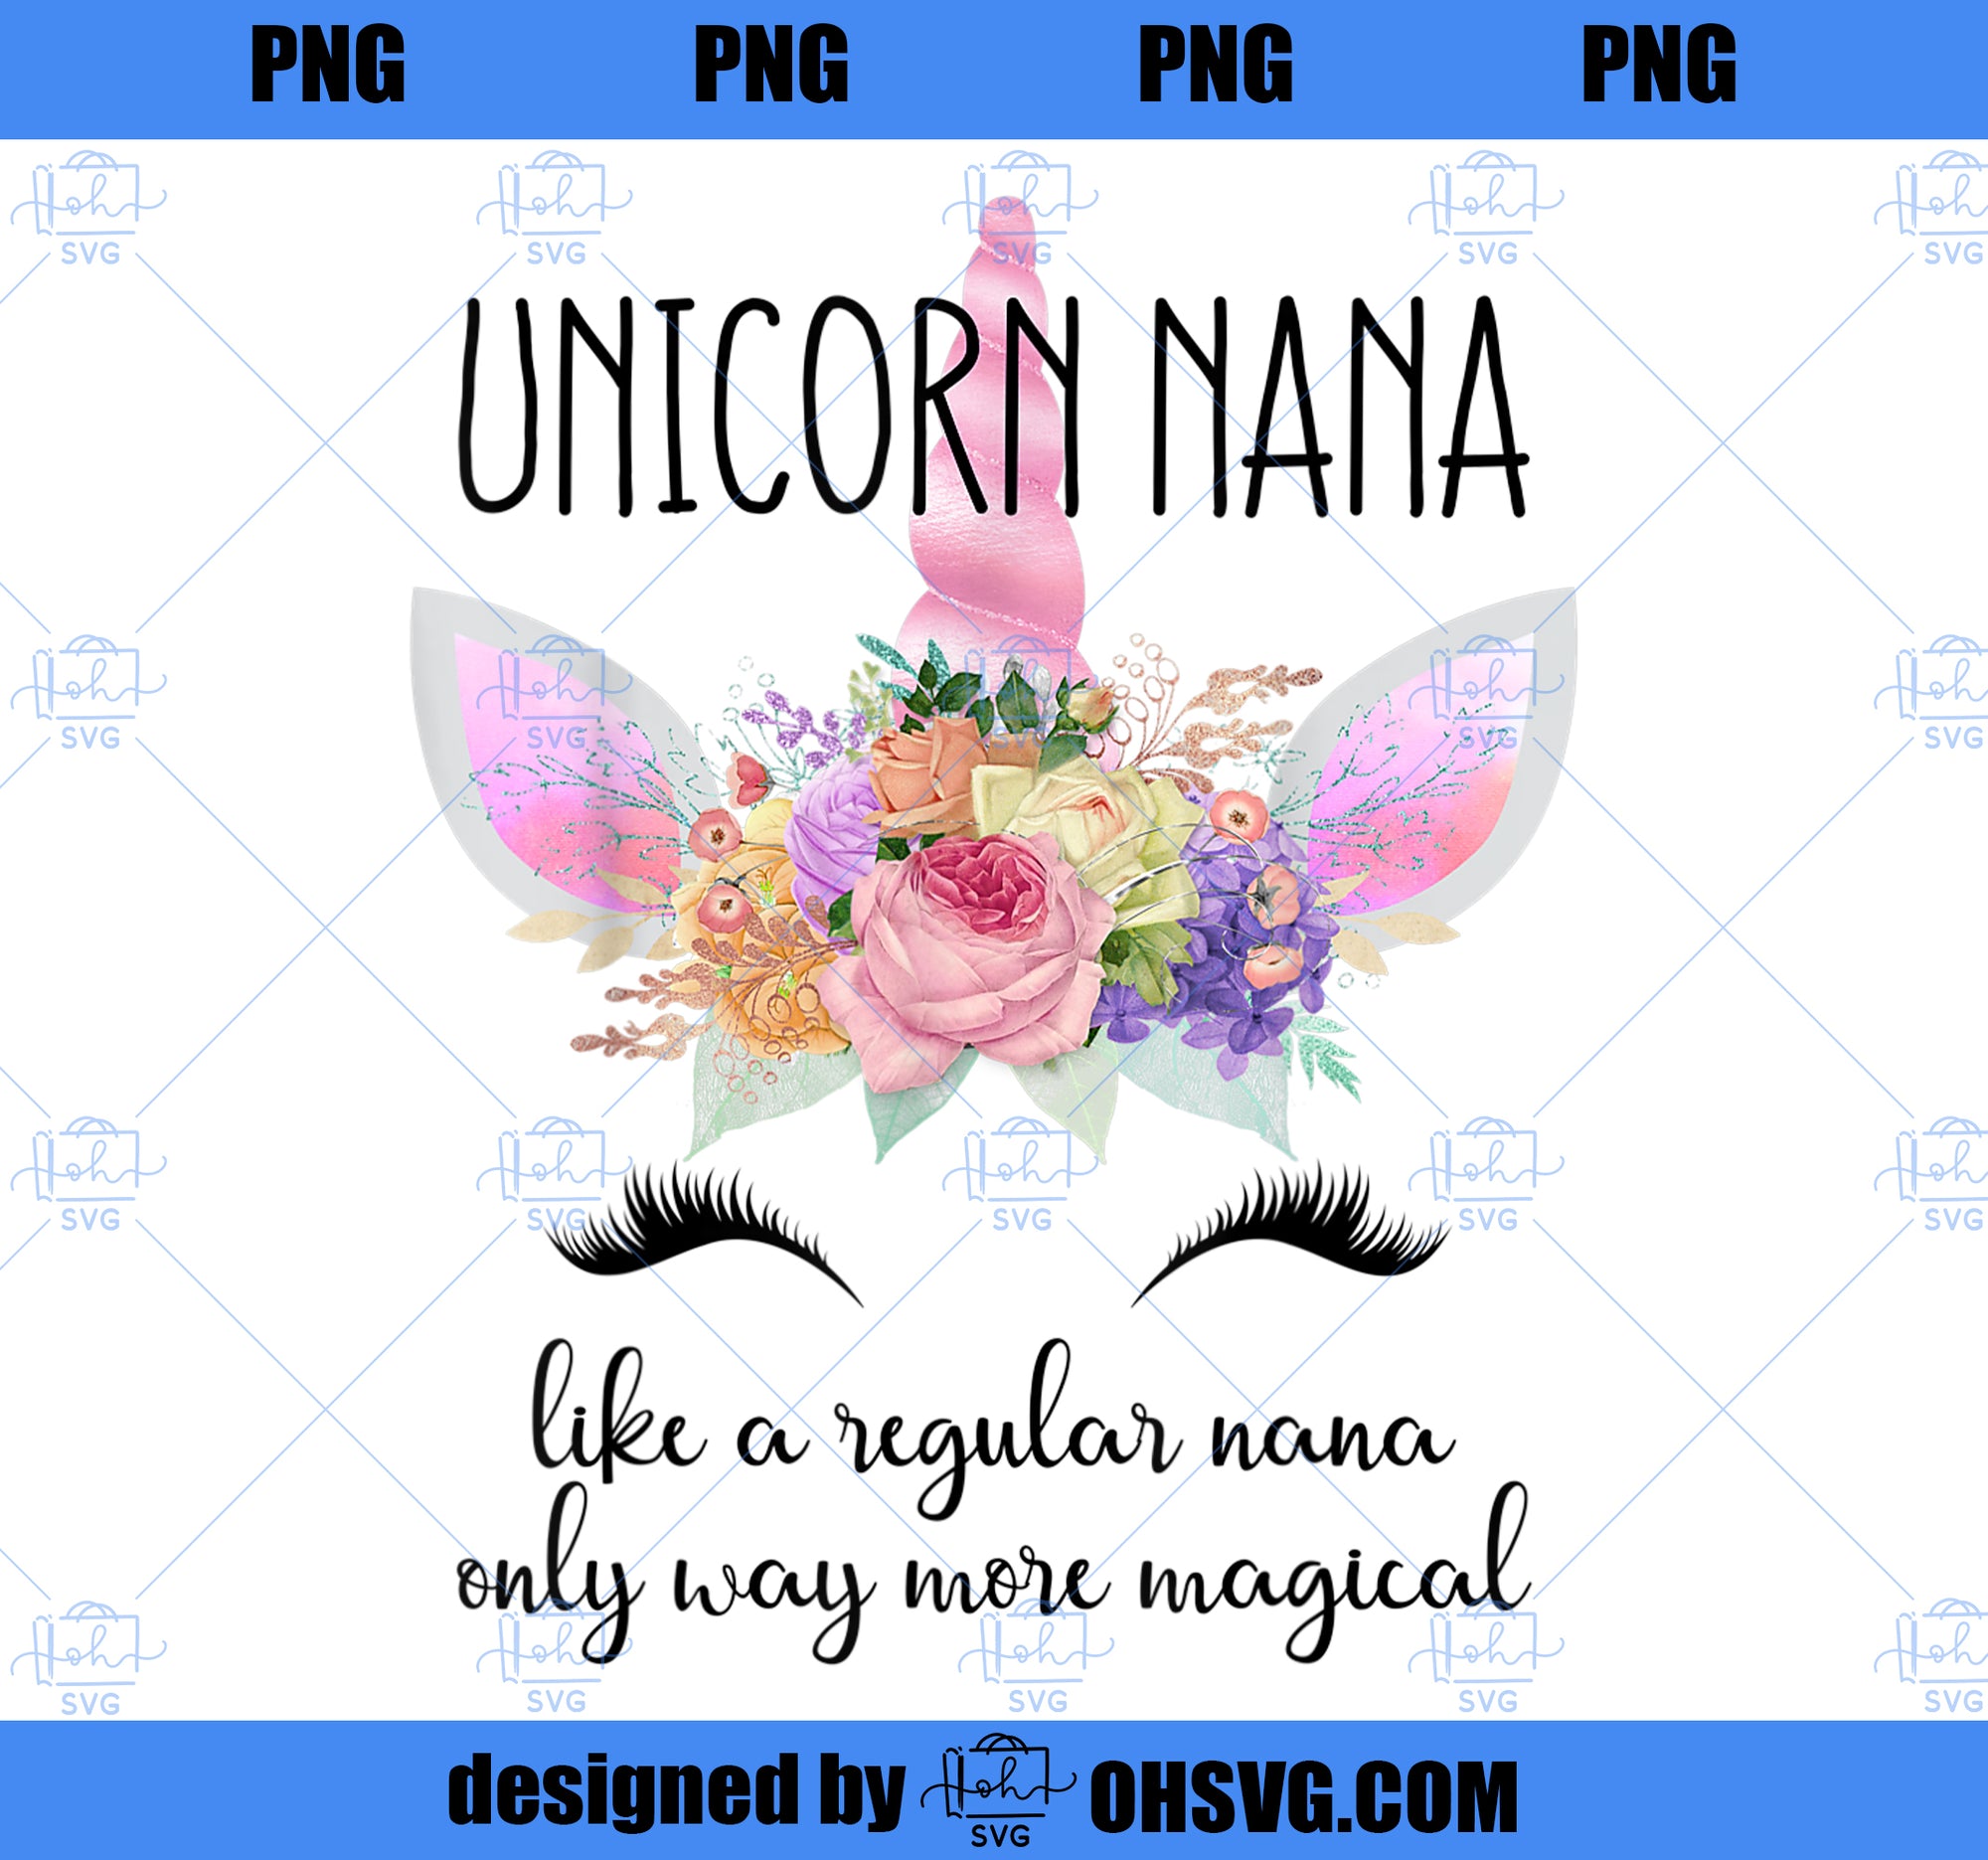 Unicorn Grandma of the Birthday Girl Unicorn Nana PNG, Magic Unicorn PNG, Unicorn PNG